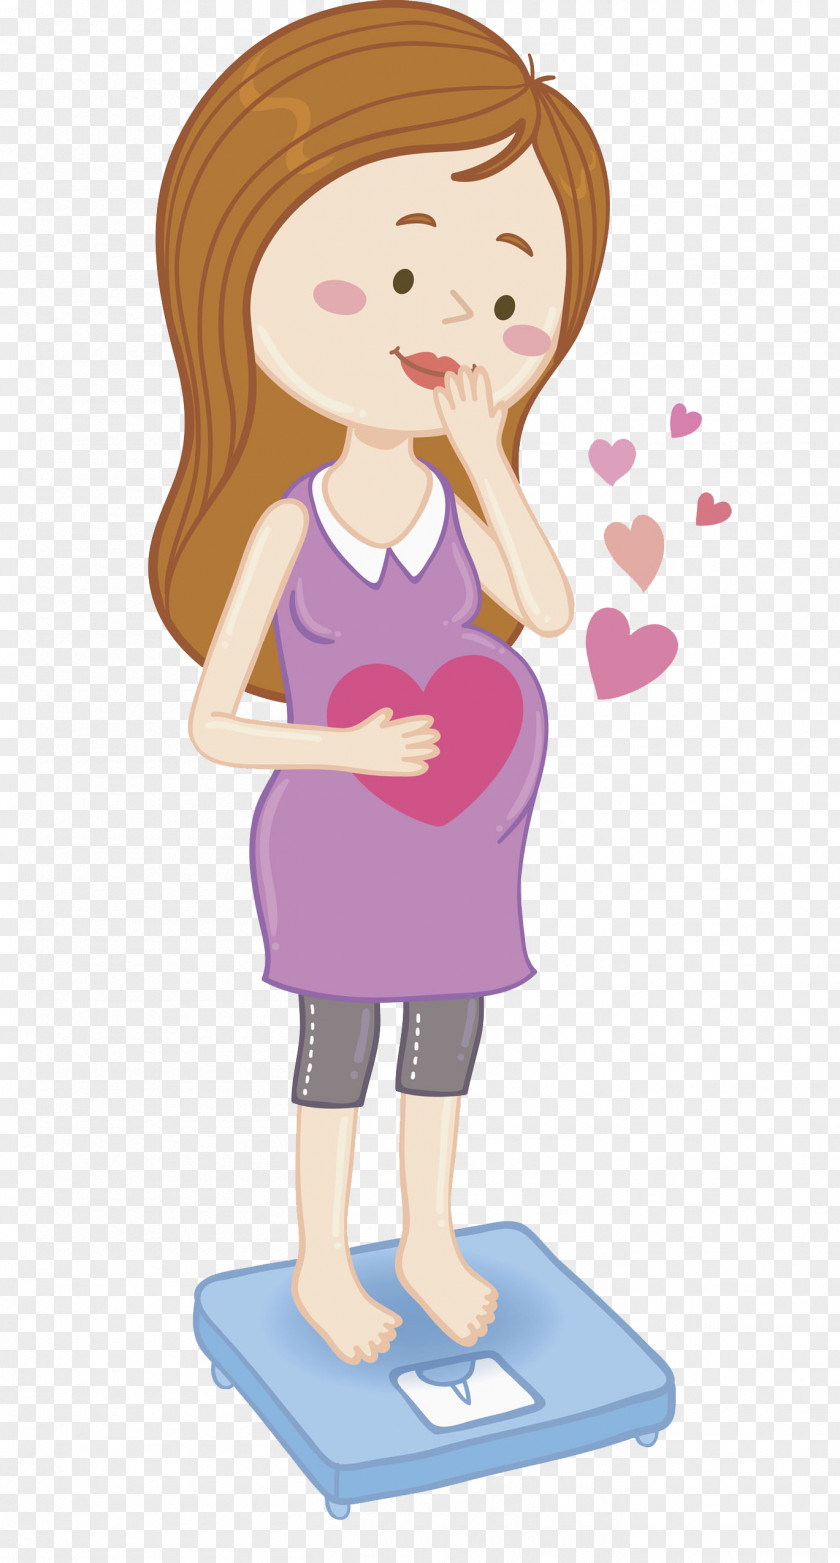 Love Pregnant Woman Pregnancy Drawing Dessin Animxe9 Fetus PNG